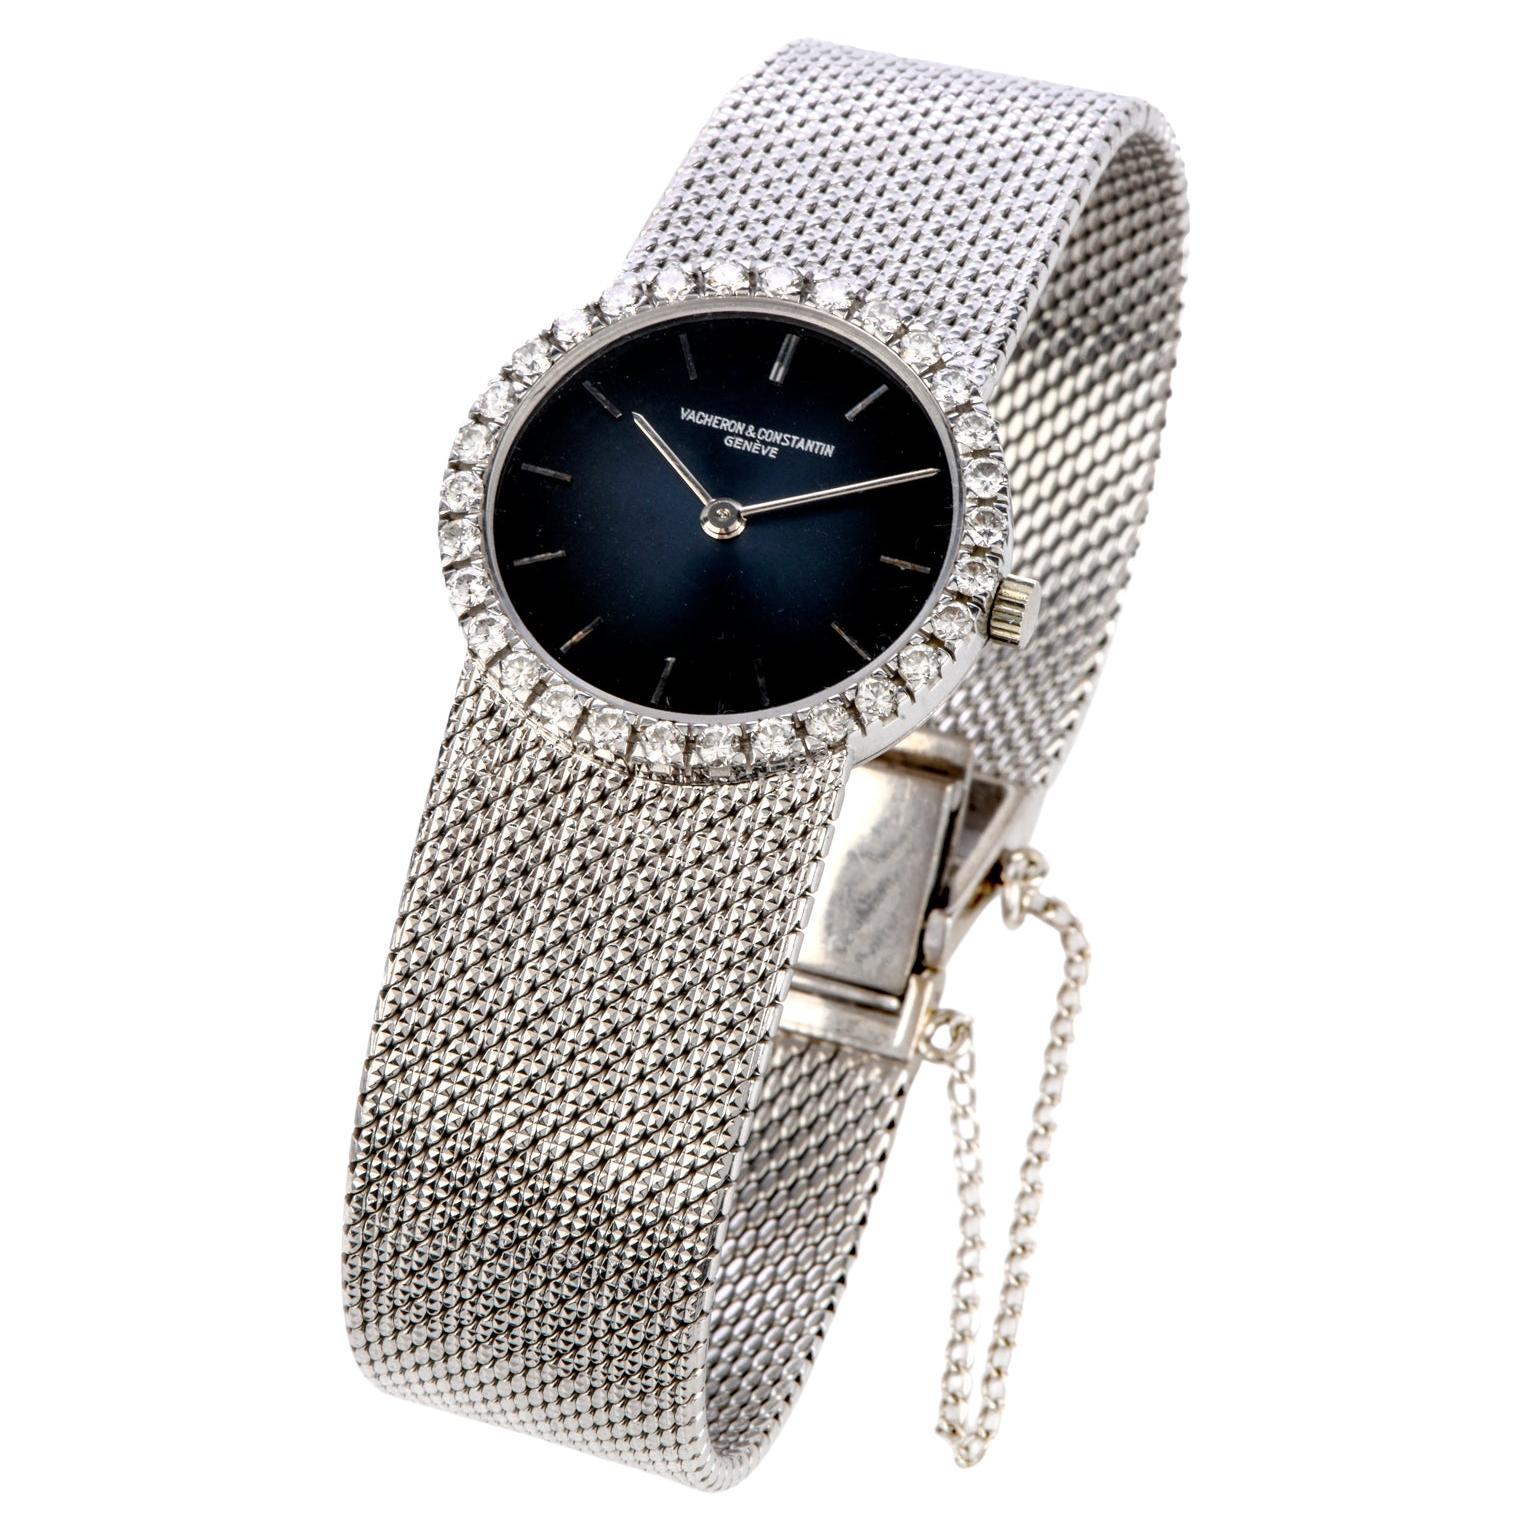 Is Vacheron Constantin a luxury watch?